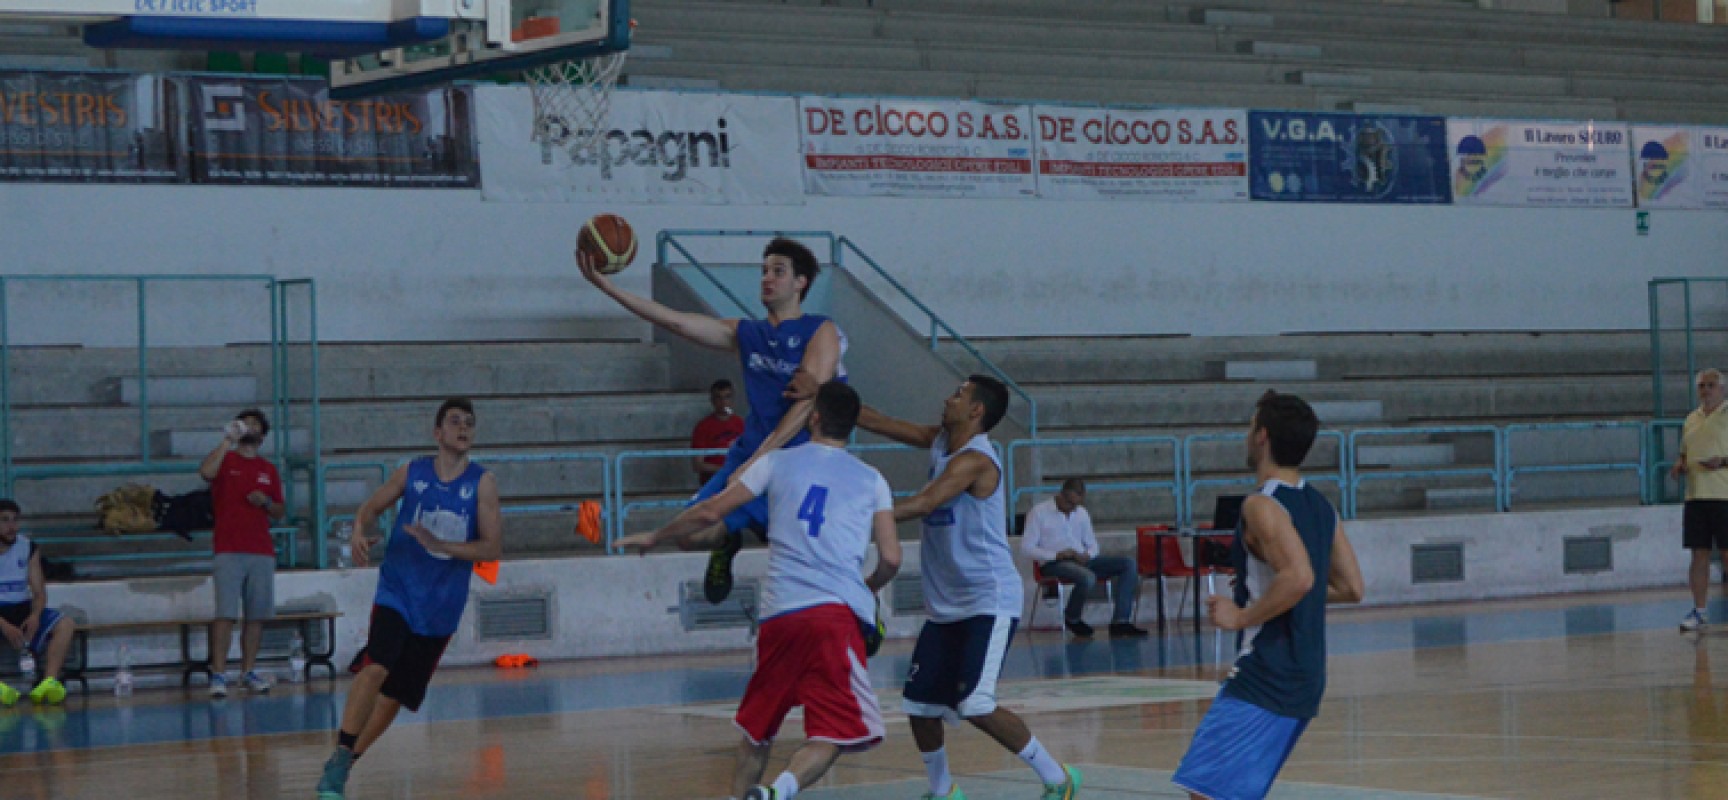 Playoff Basket, in casa Ambrosia fervono i preparativi per gara 1 ad Agropoli